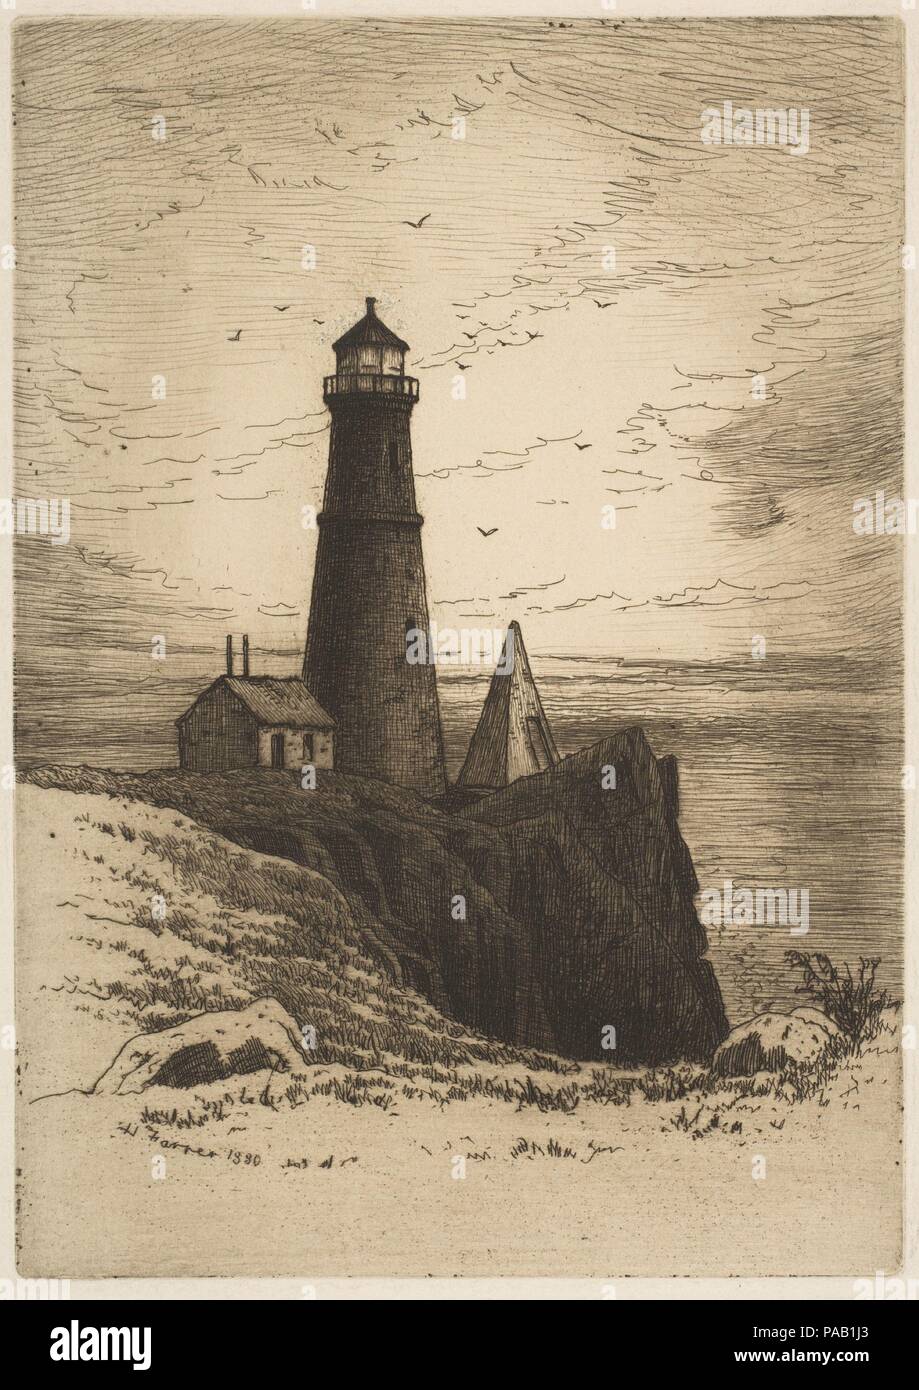 Lighthouse. Artist: Henry Farrer (American, London 1844-1903 New York). Dimensions: sheet: 6 15/16 x 4 7/8 in. (17.6 x 12.4 cm). Date: 1880. Museum: Metropolitan Museum of Art, New York, USA. Stock Photo